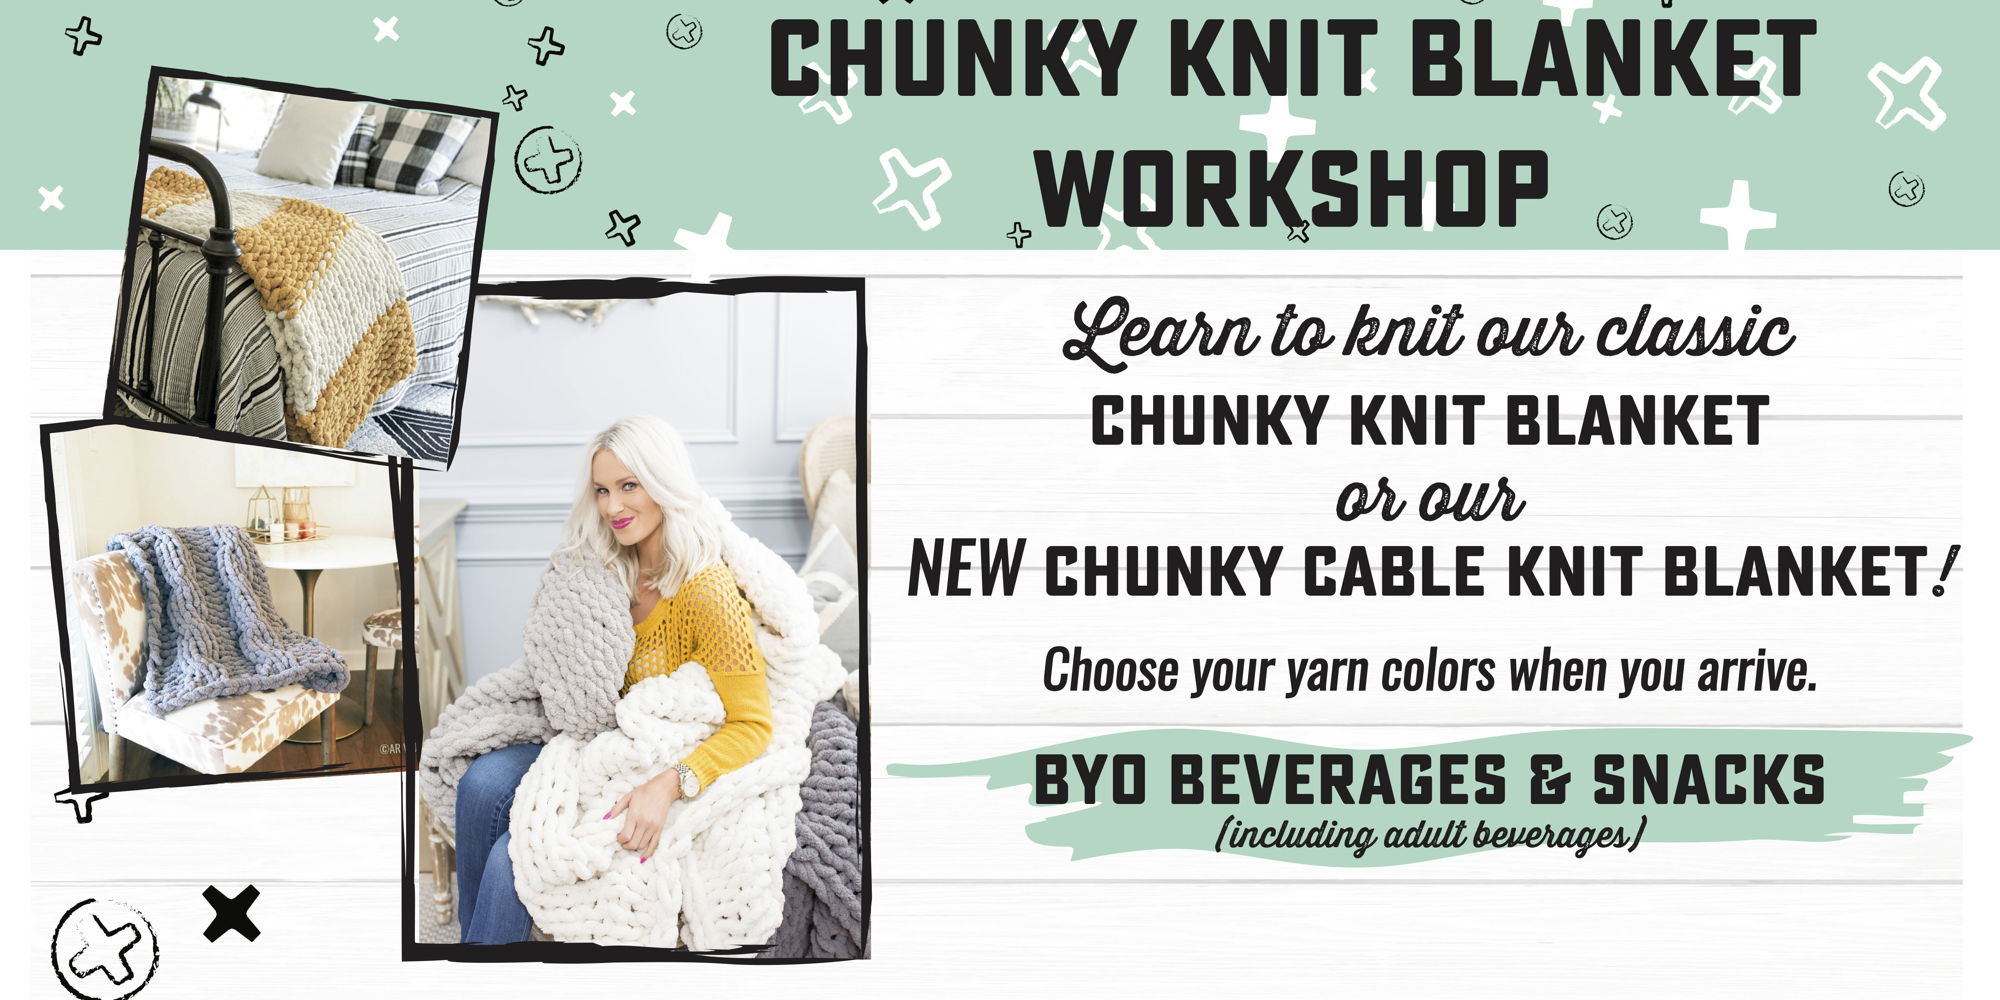 Chunky Knit Blanket Workshop promotional image